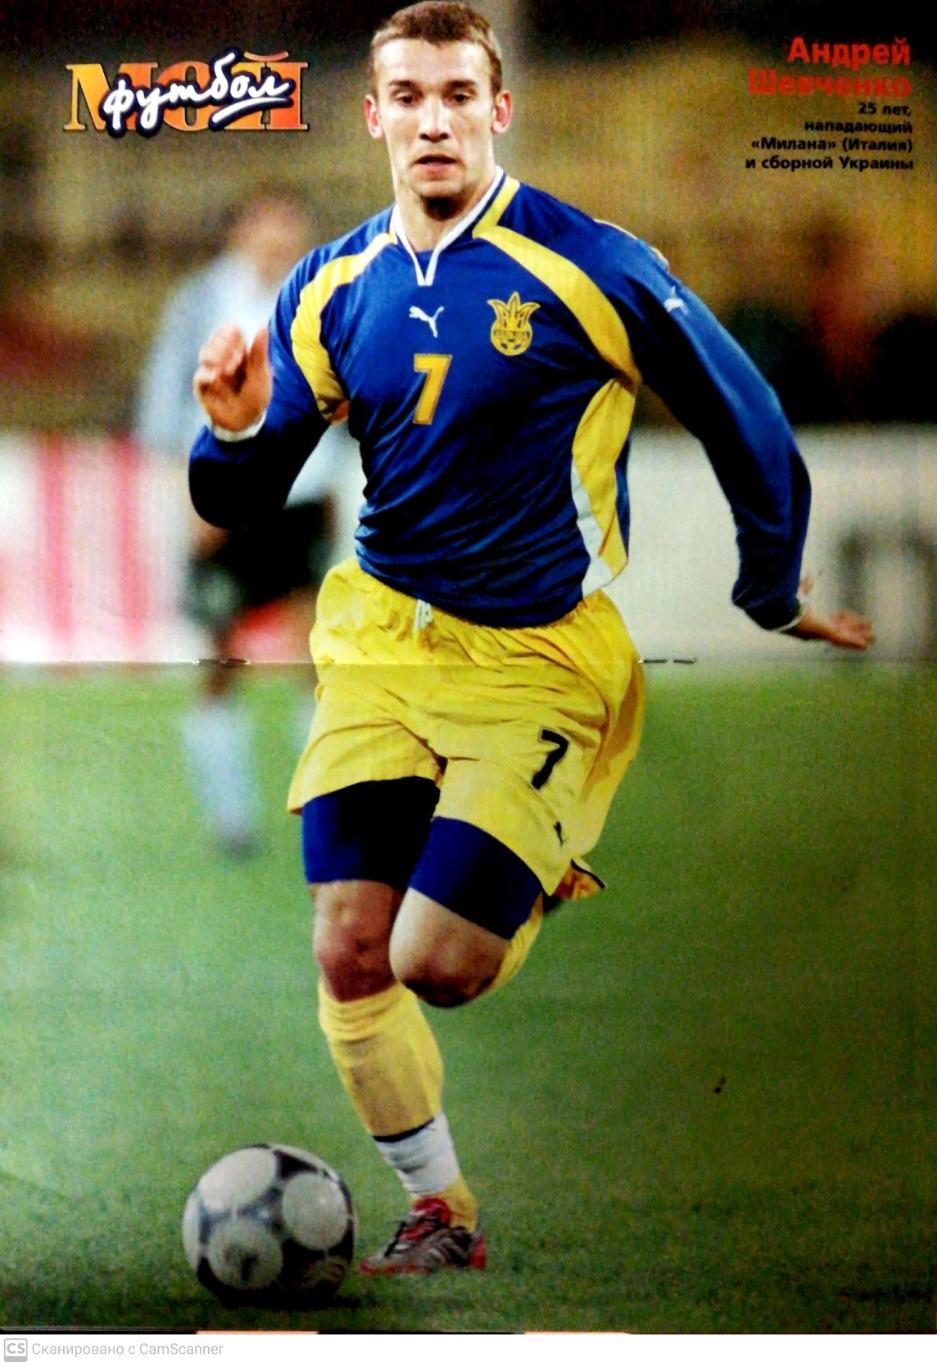 Журнал Мой футбол (Москва). 16.01.2002 1